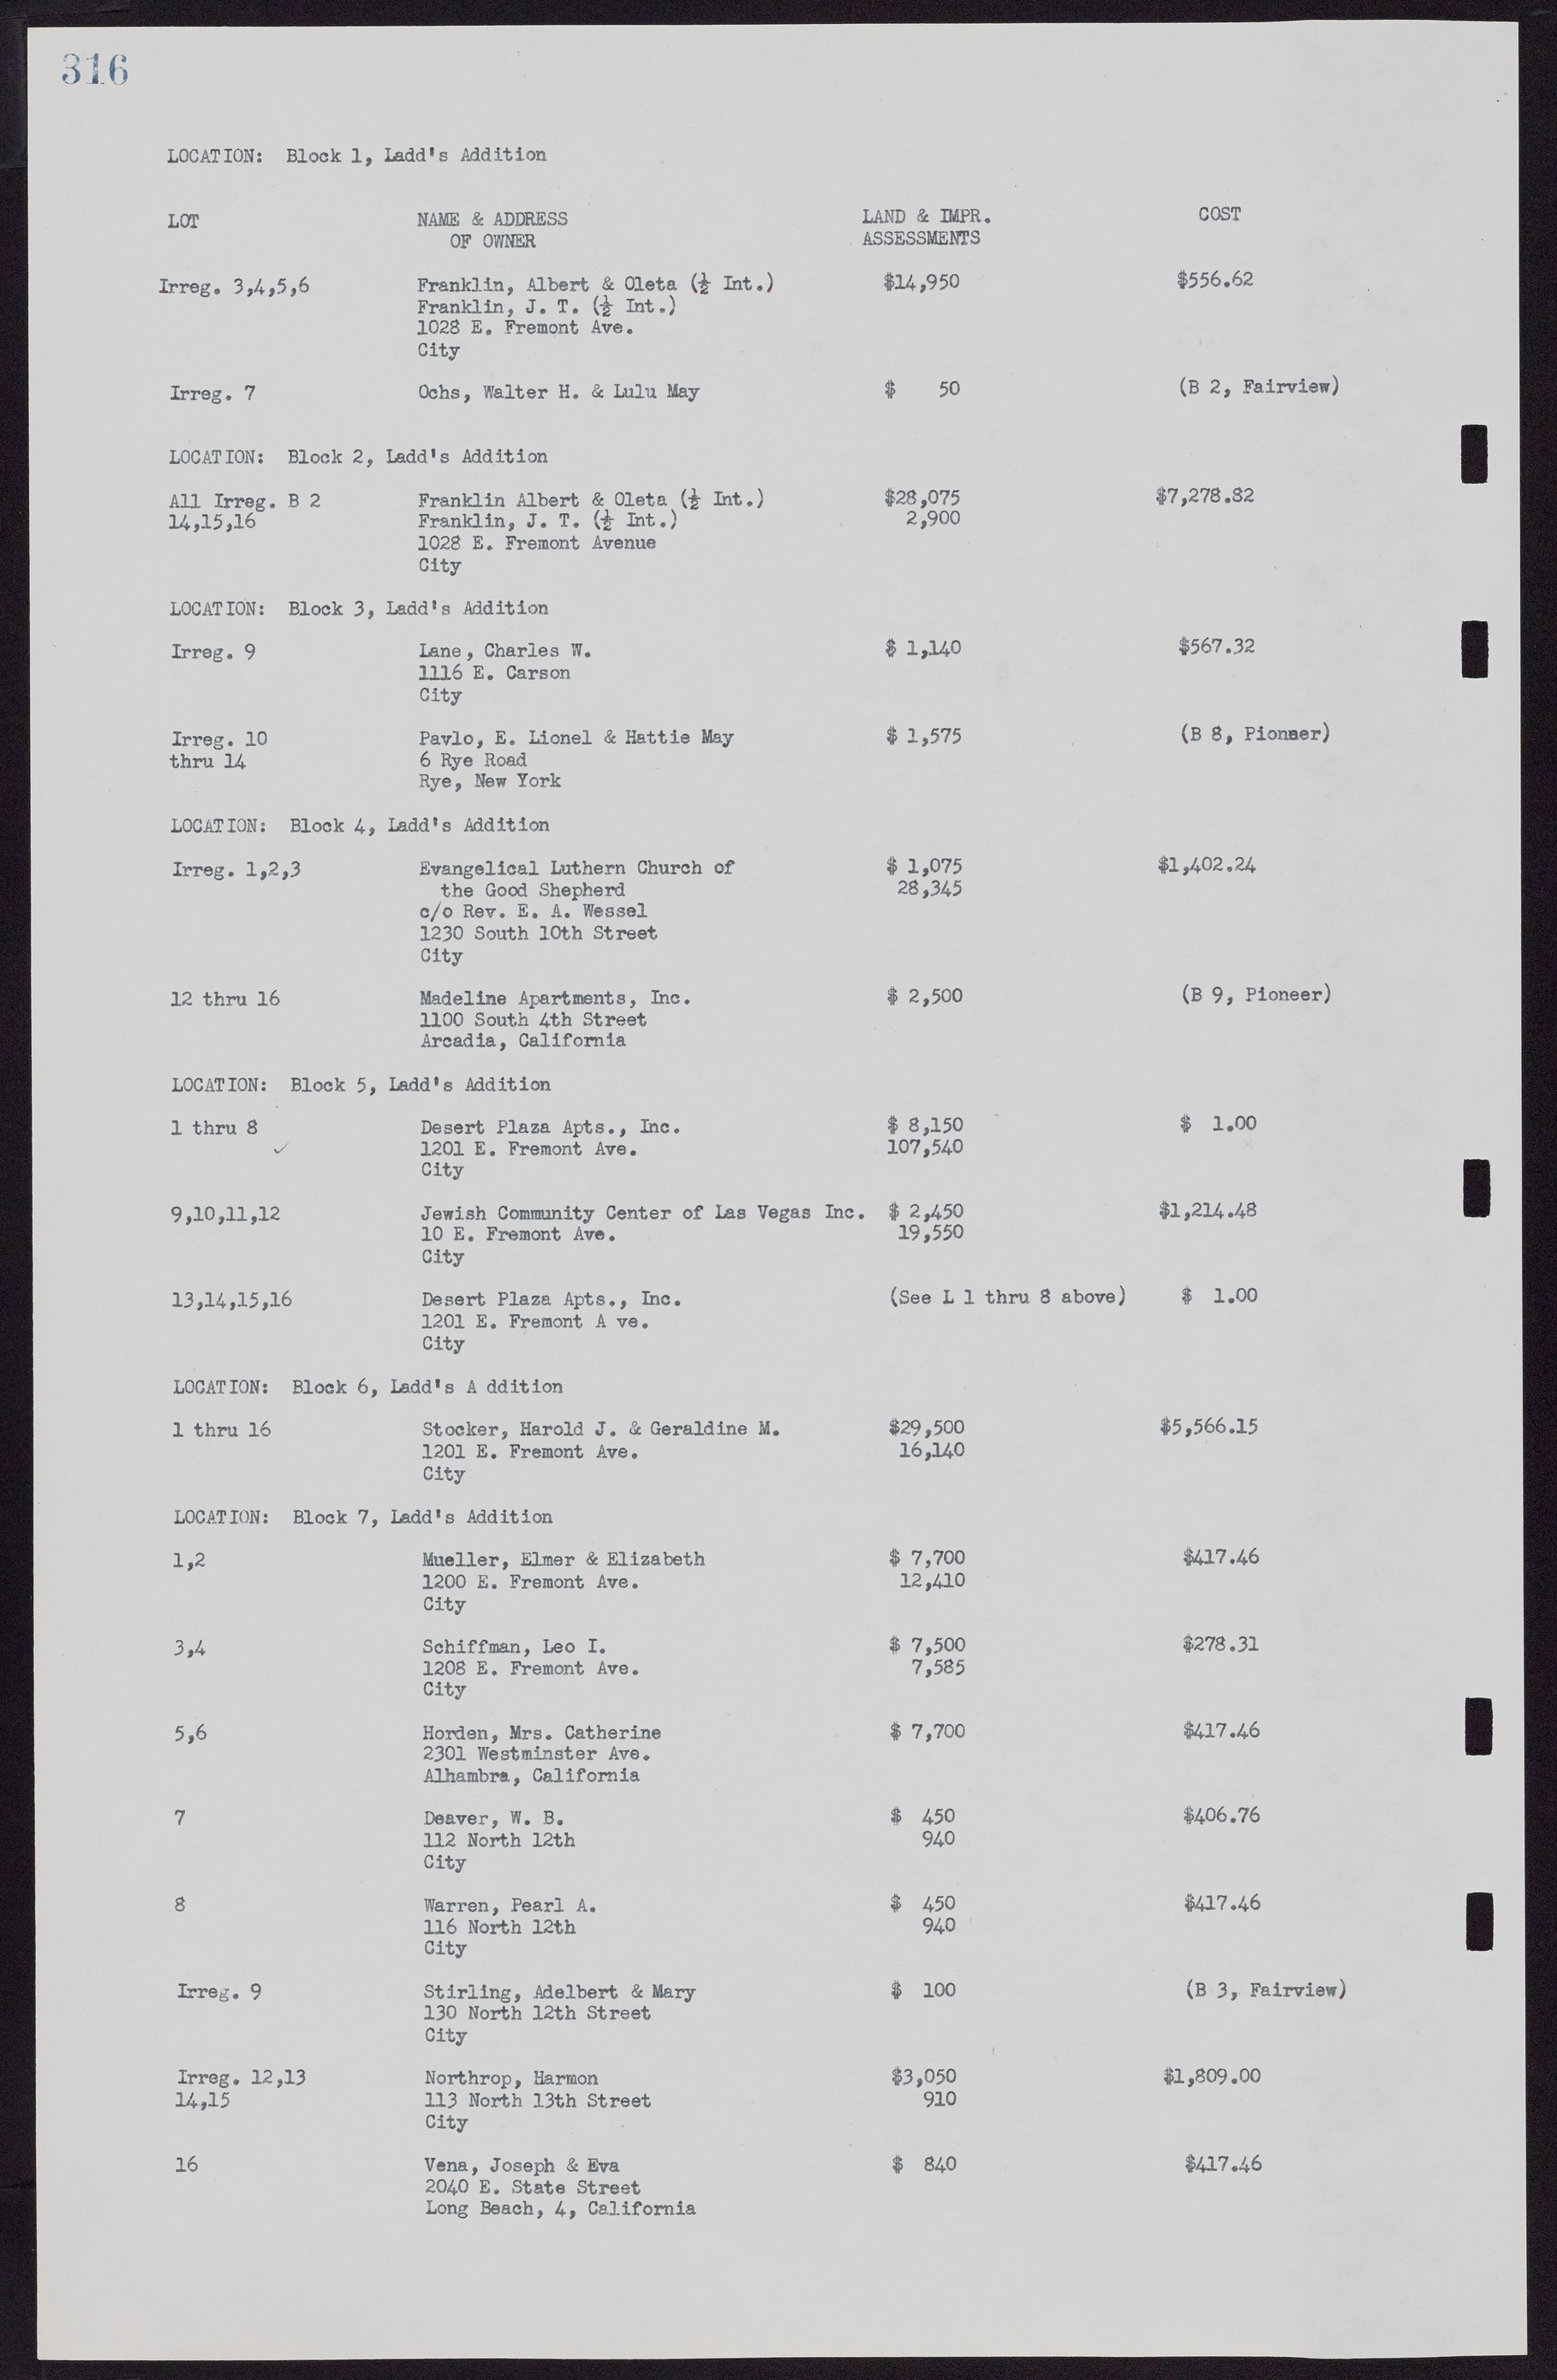 Las Vegas City Commission Minutes, November 7, 1949 to May 21, 1952, lvc000007-328